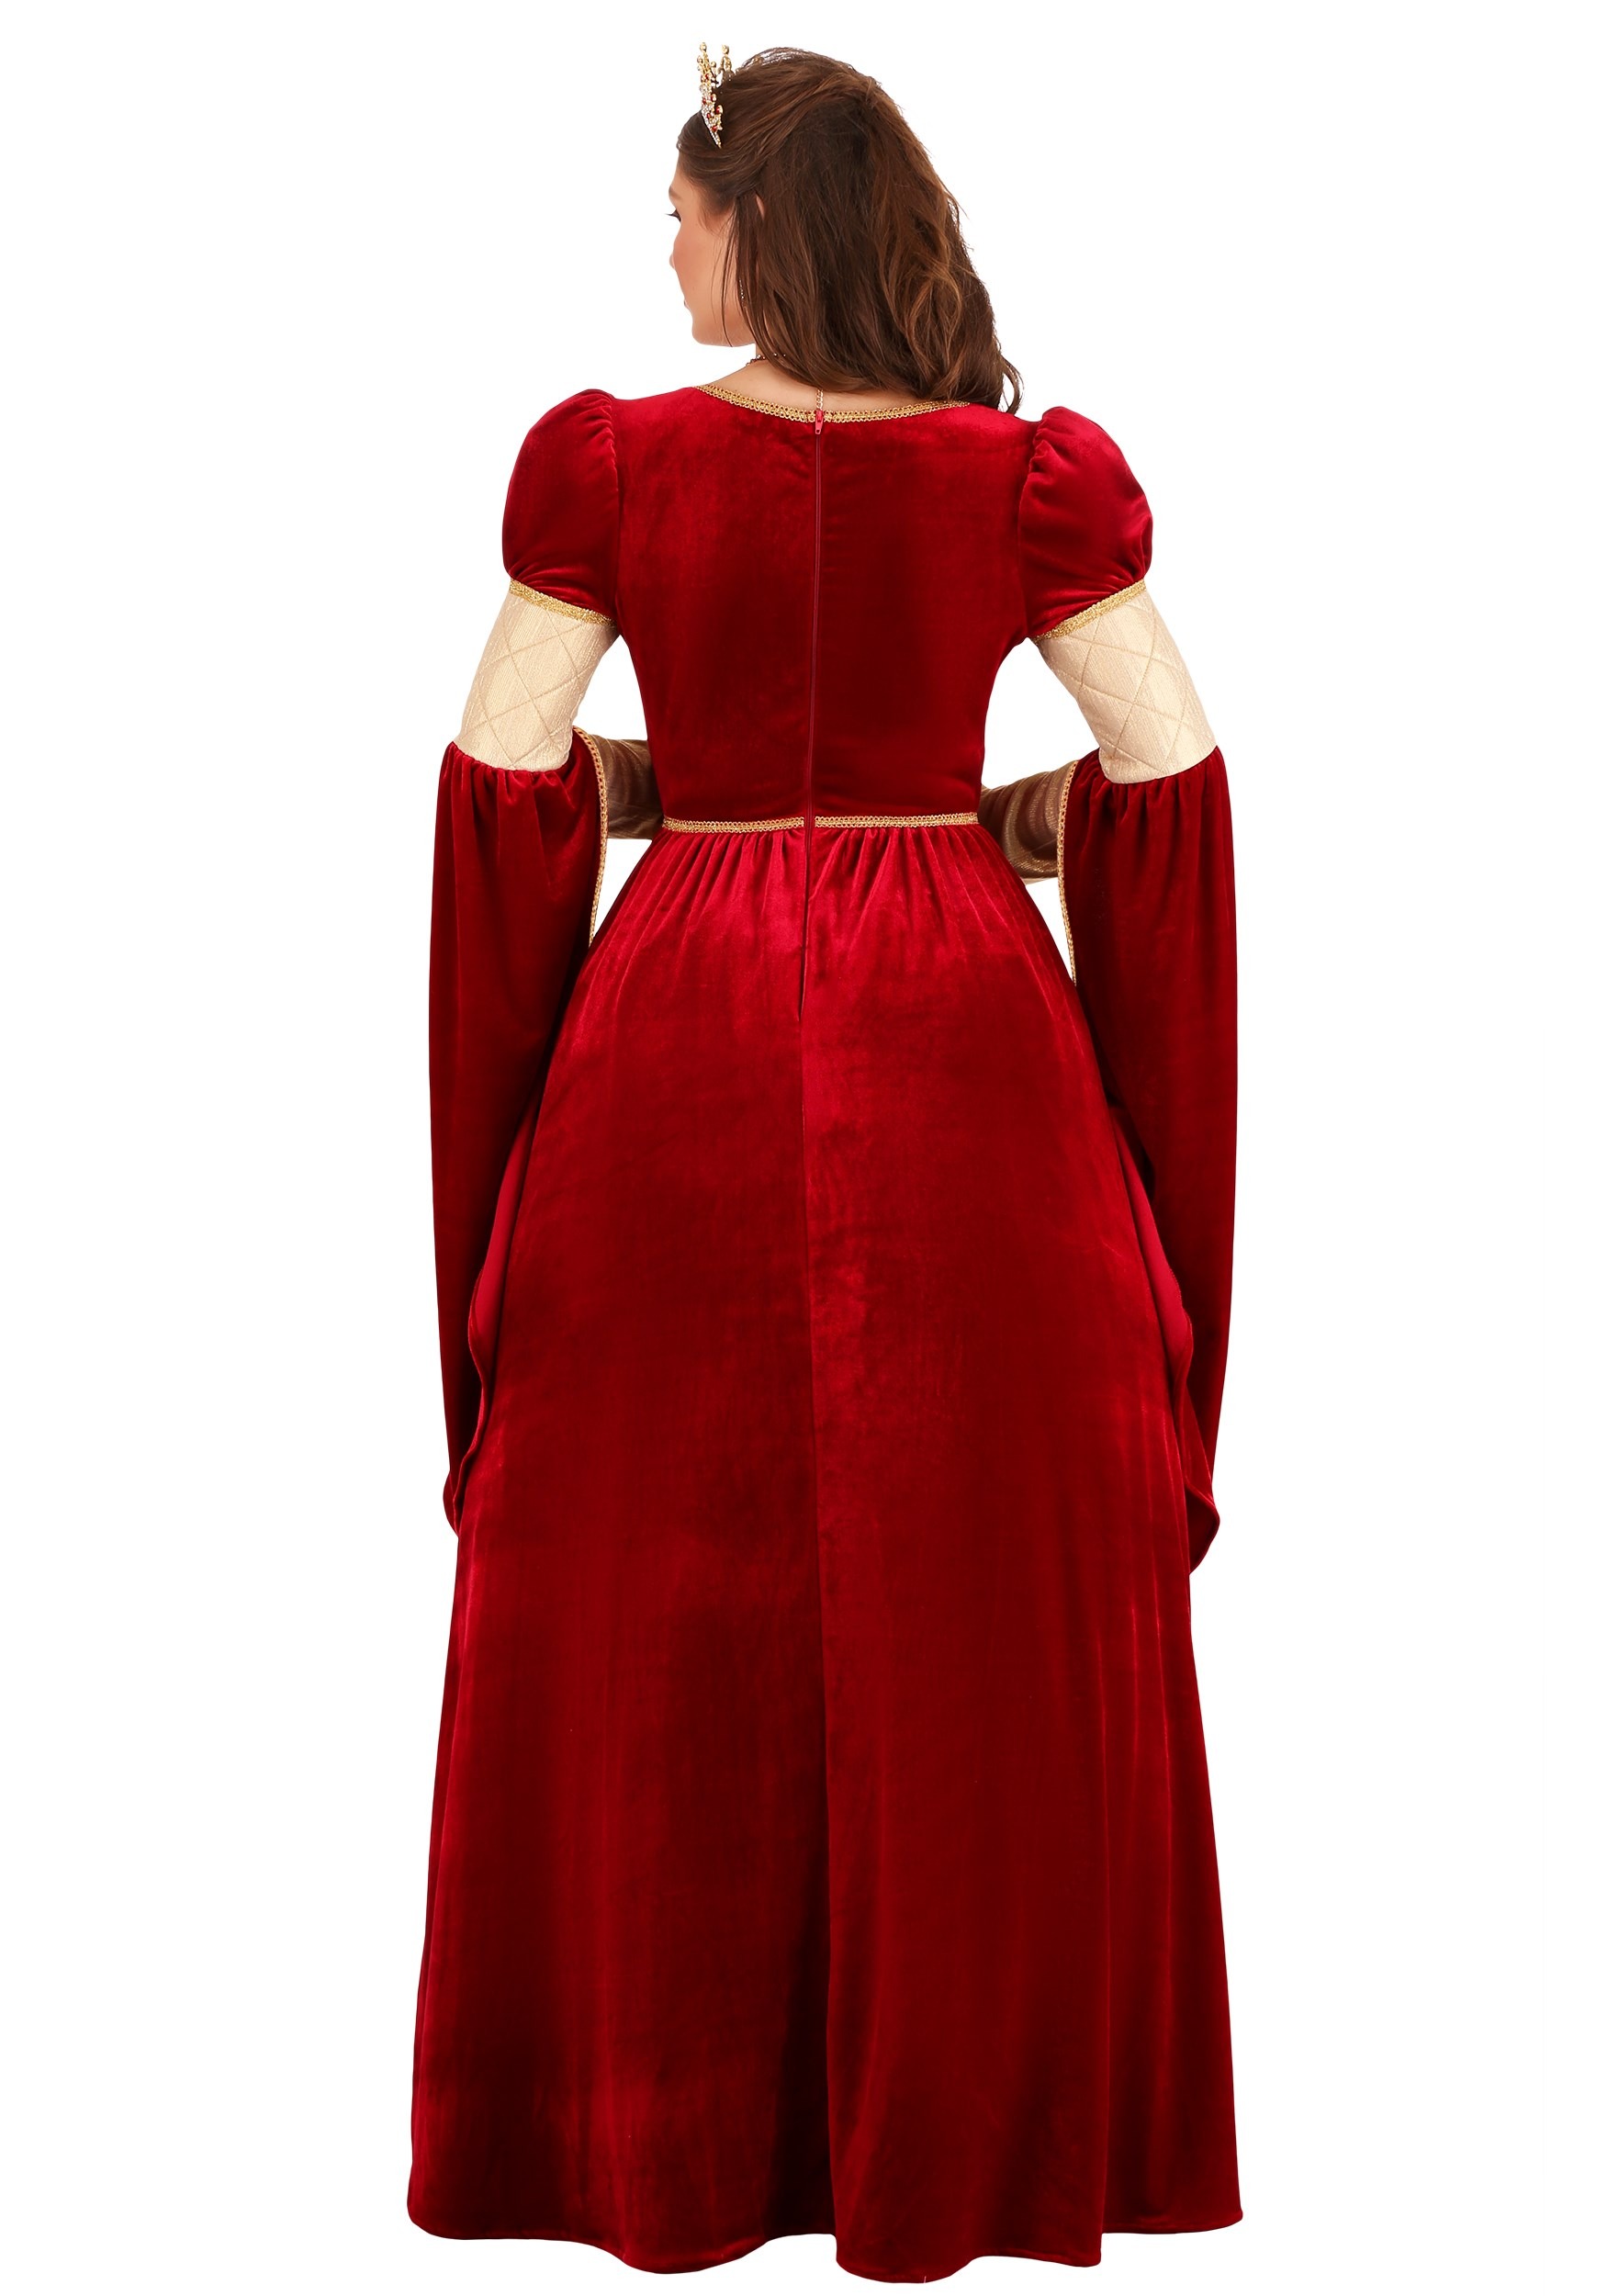 Regal Renaissance Queen Women's Costume